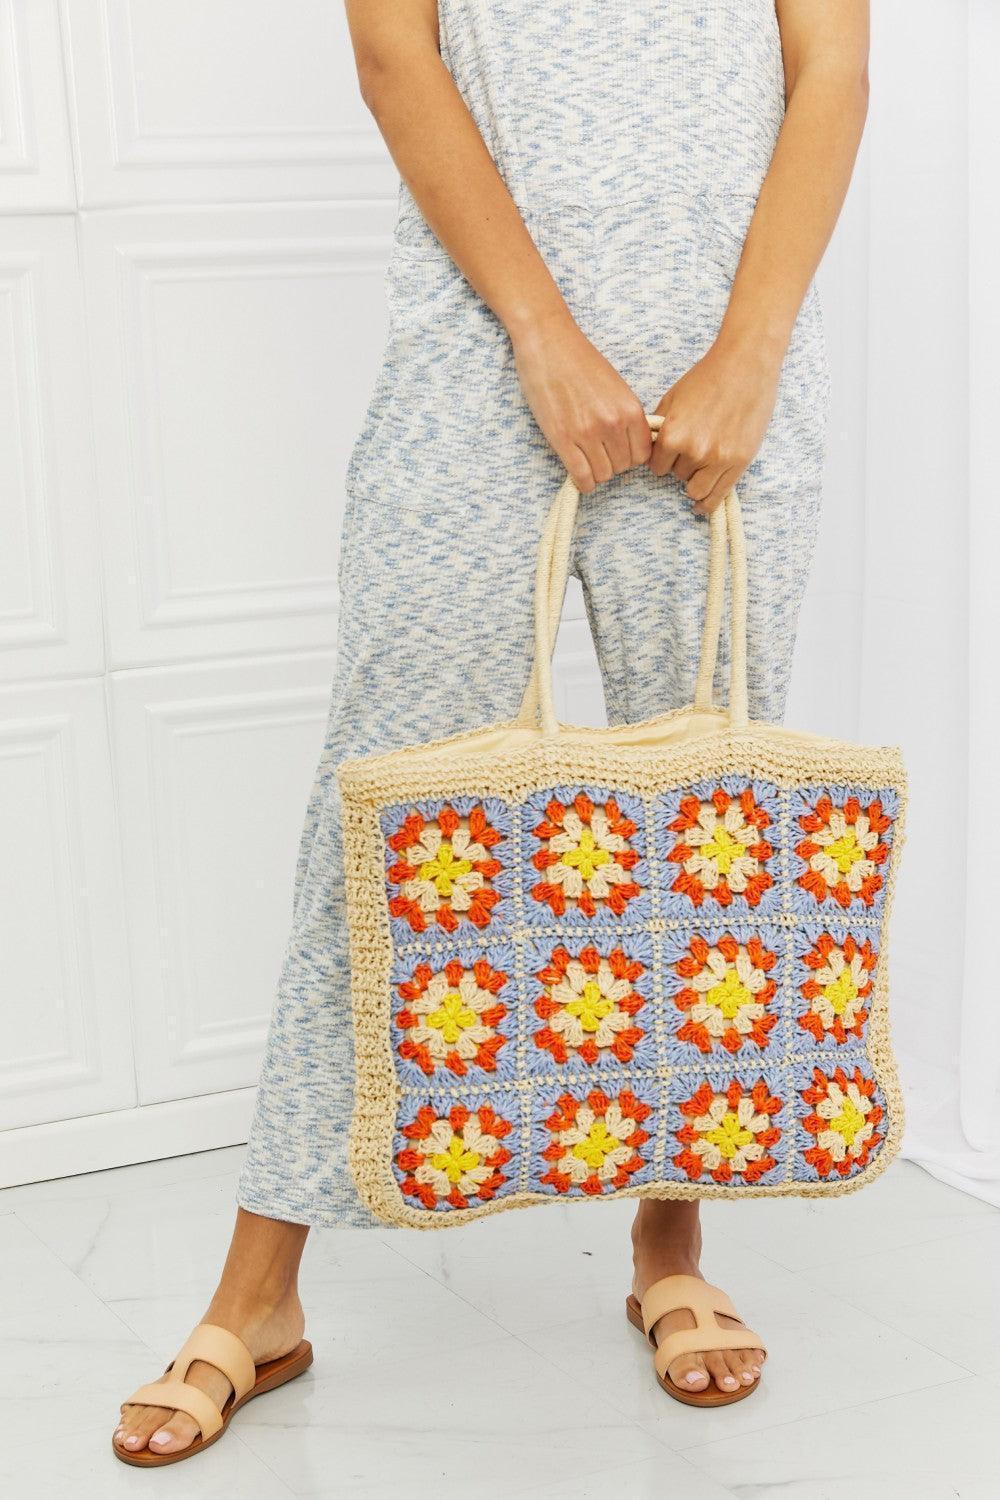 Coastal Chill Floral Embroidery Tote Bag - MXSTUDIO.COM